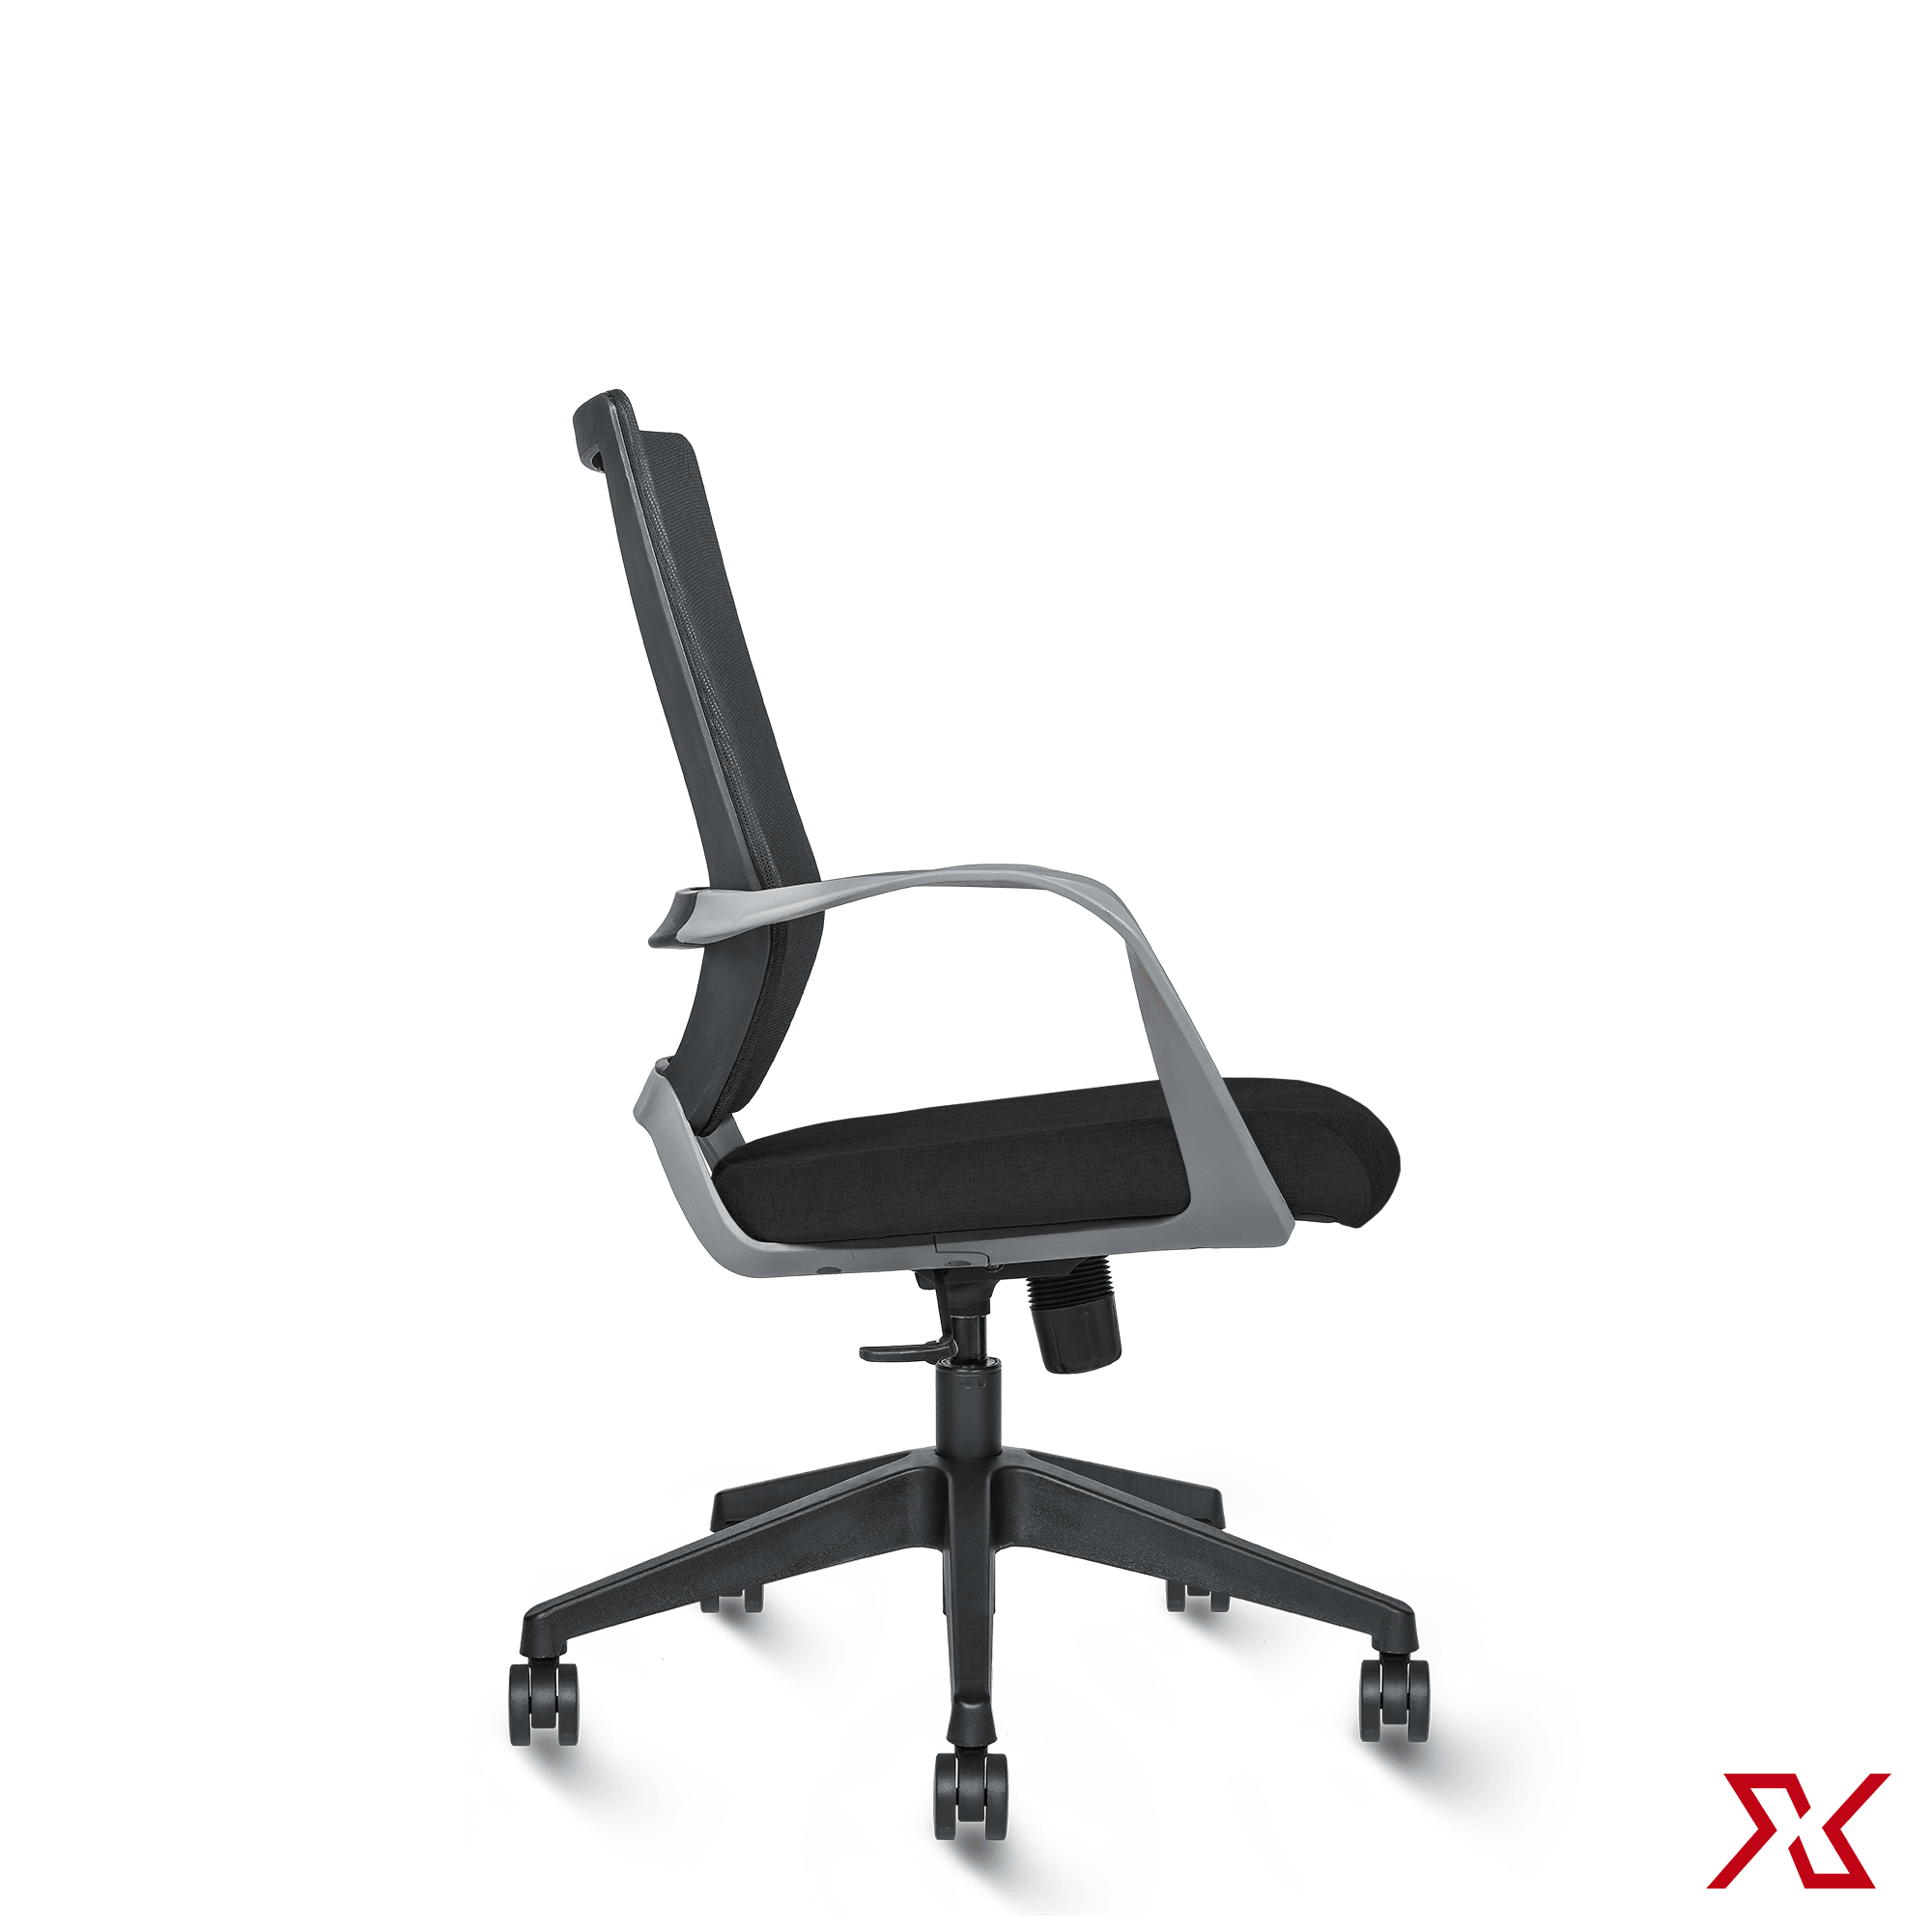 ZAK Medium Back (Black Chair) - Exclusiff Seating Sytems